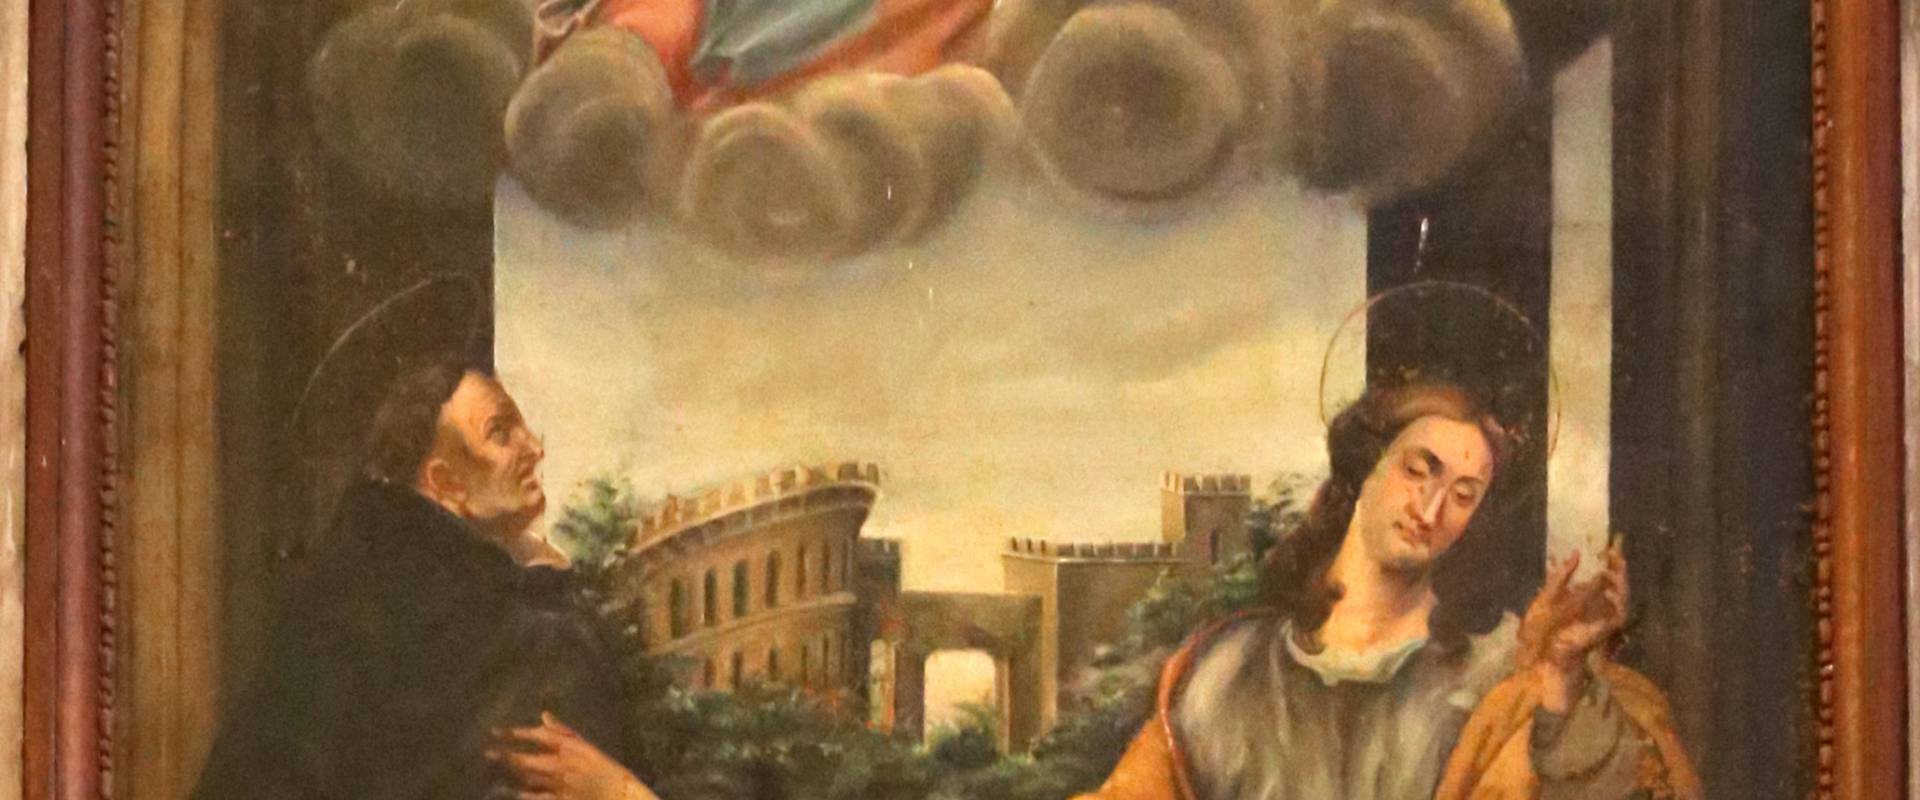 Italia centrale, assunta tra i ss. vincenzo ferrer e marta, 1700-50 ca. 02 photo by Sailko